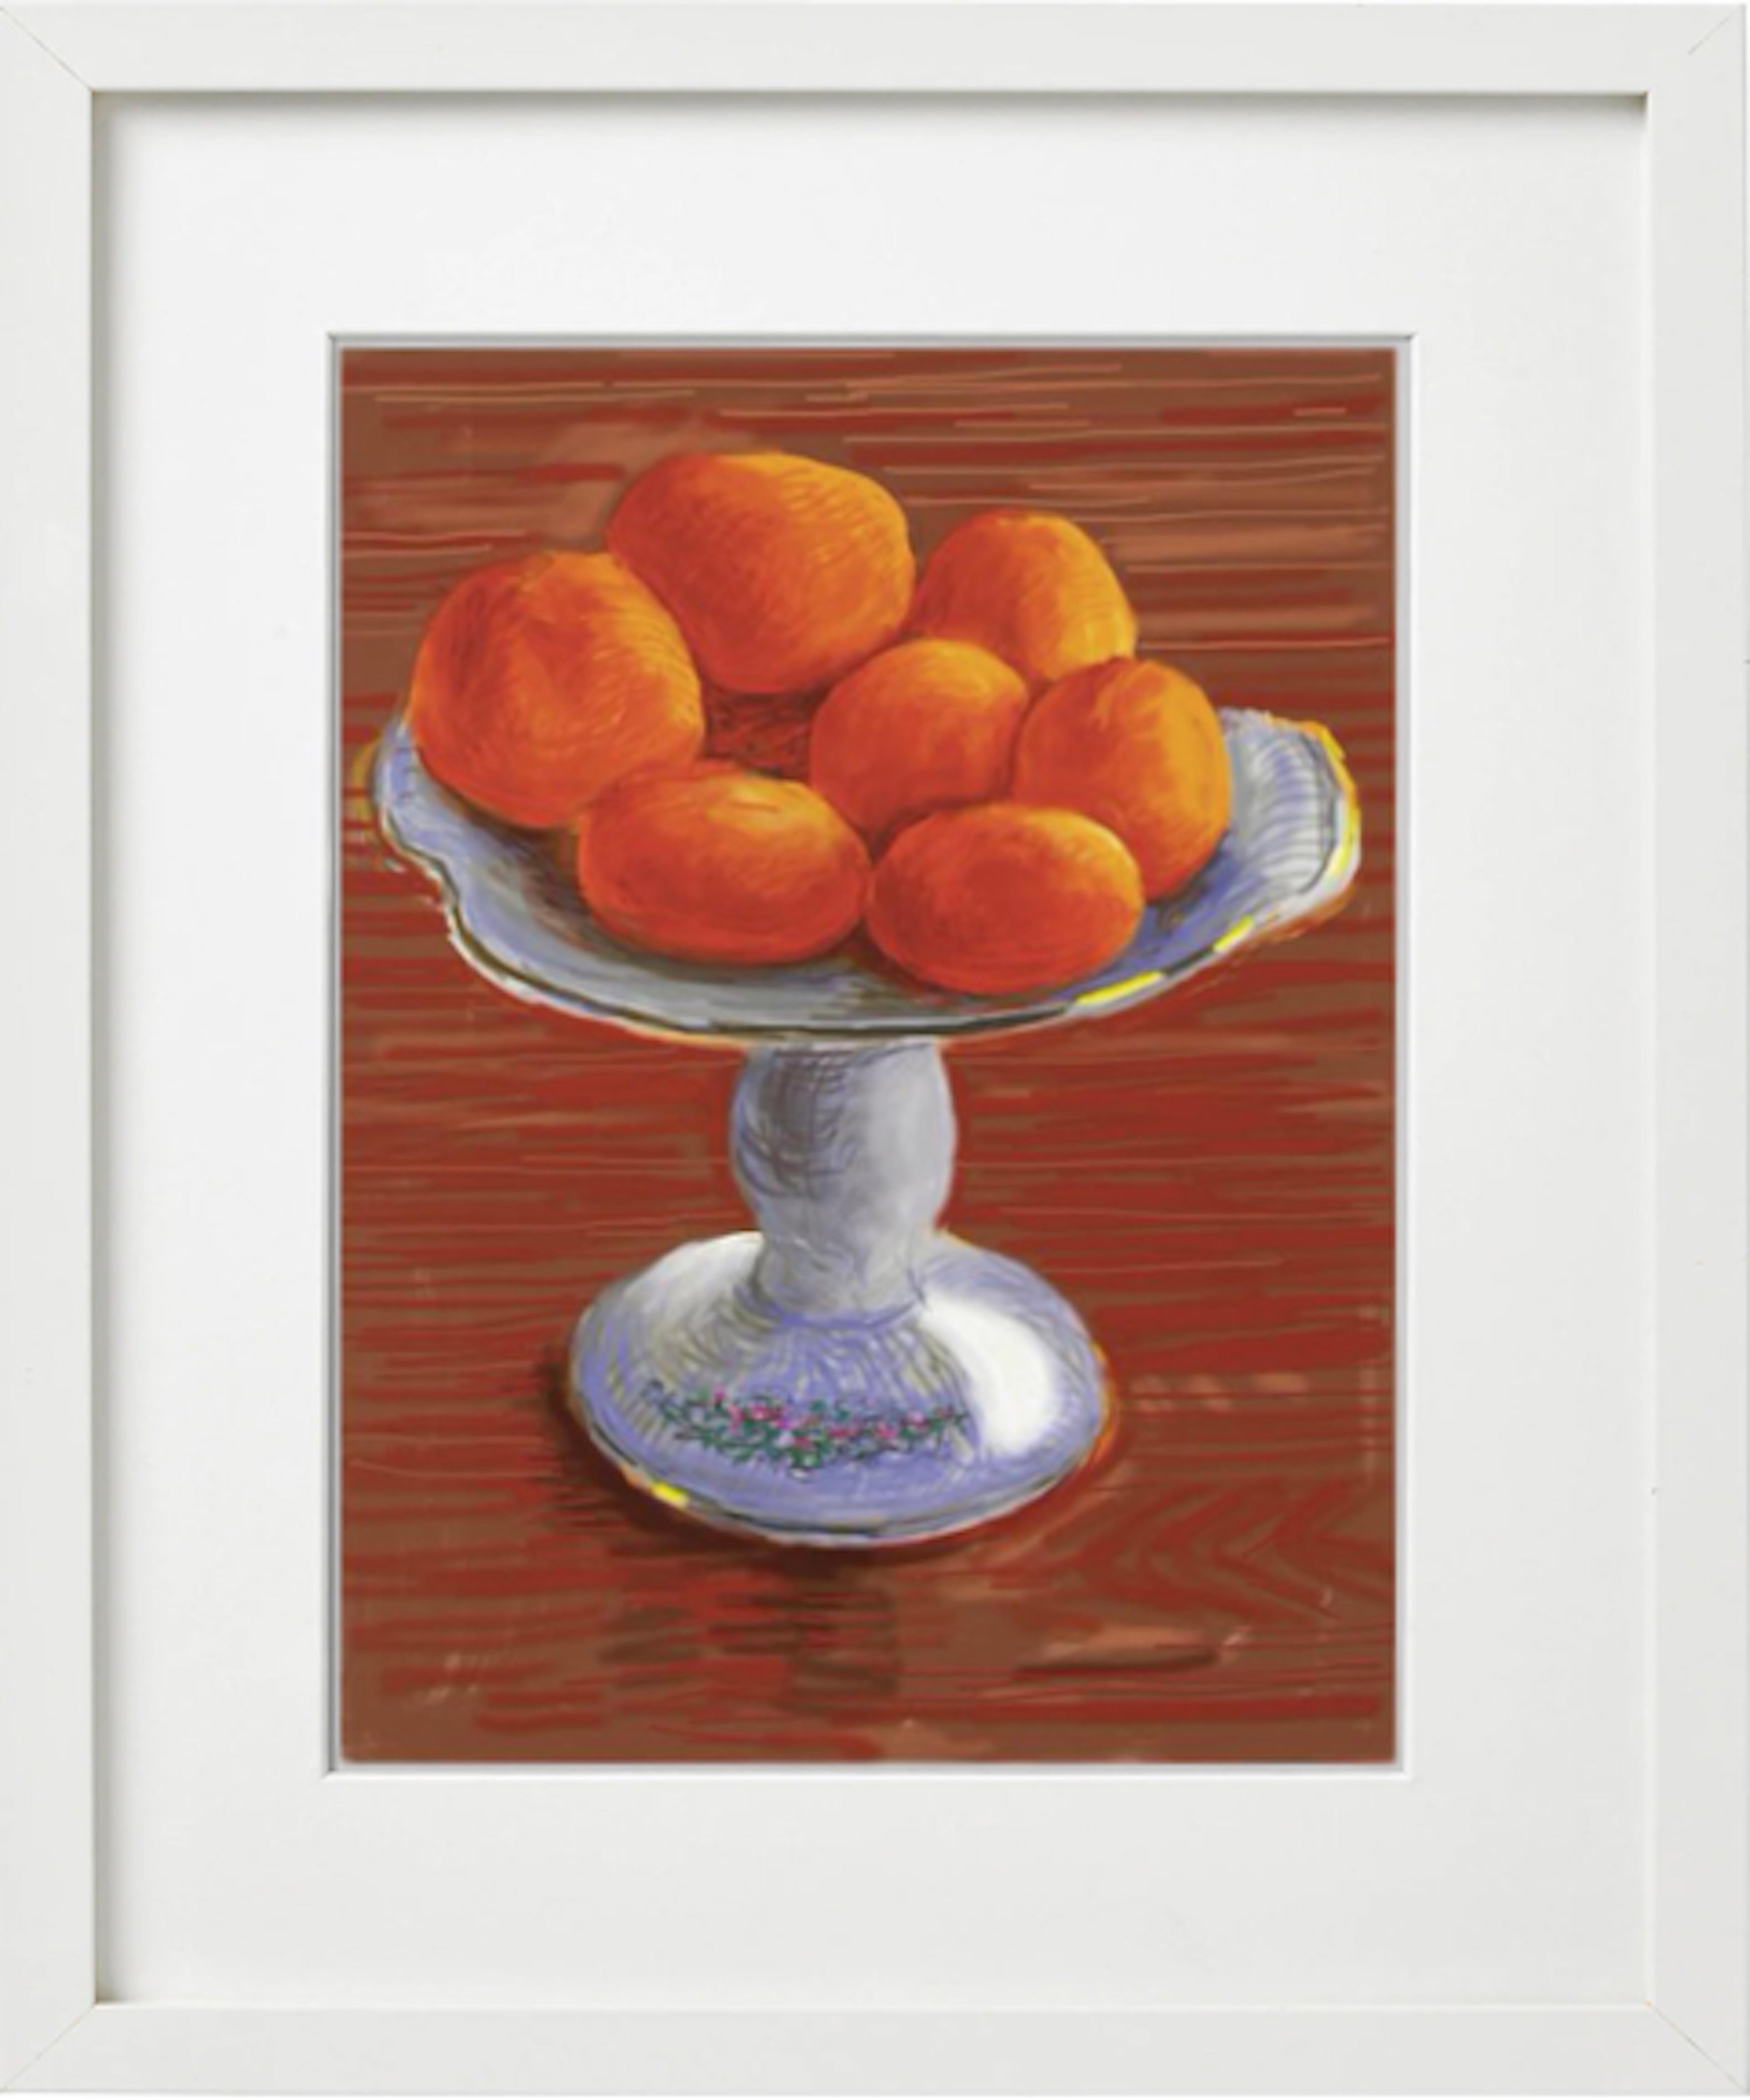 David Hockney Portrait Print - Tangerines